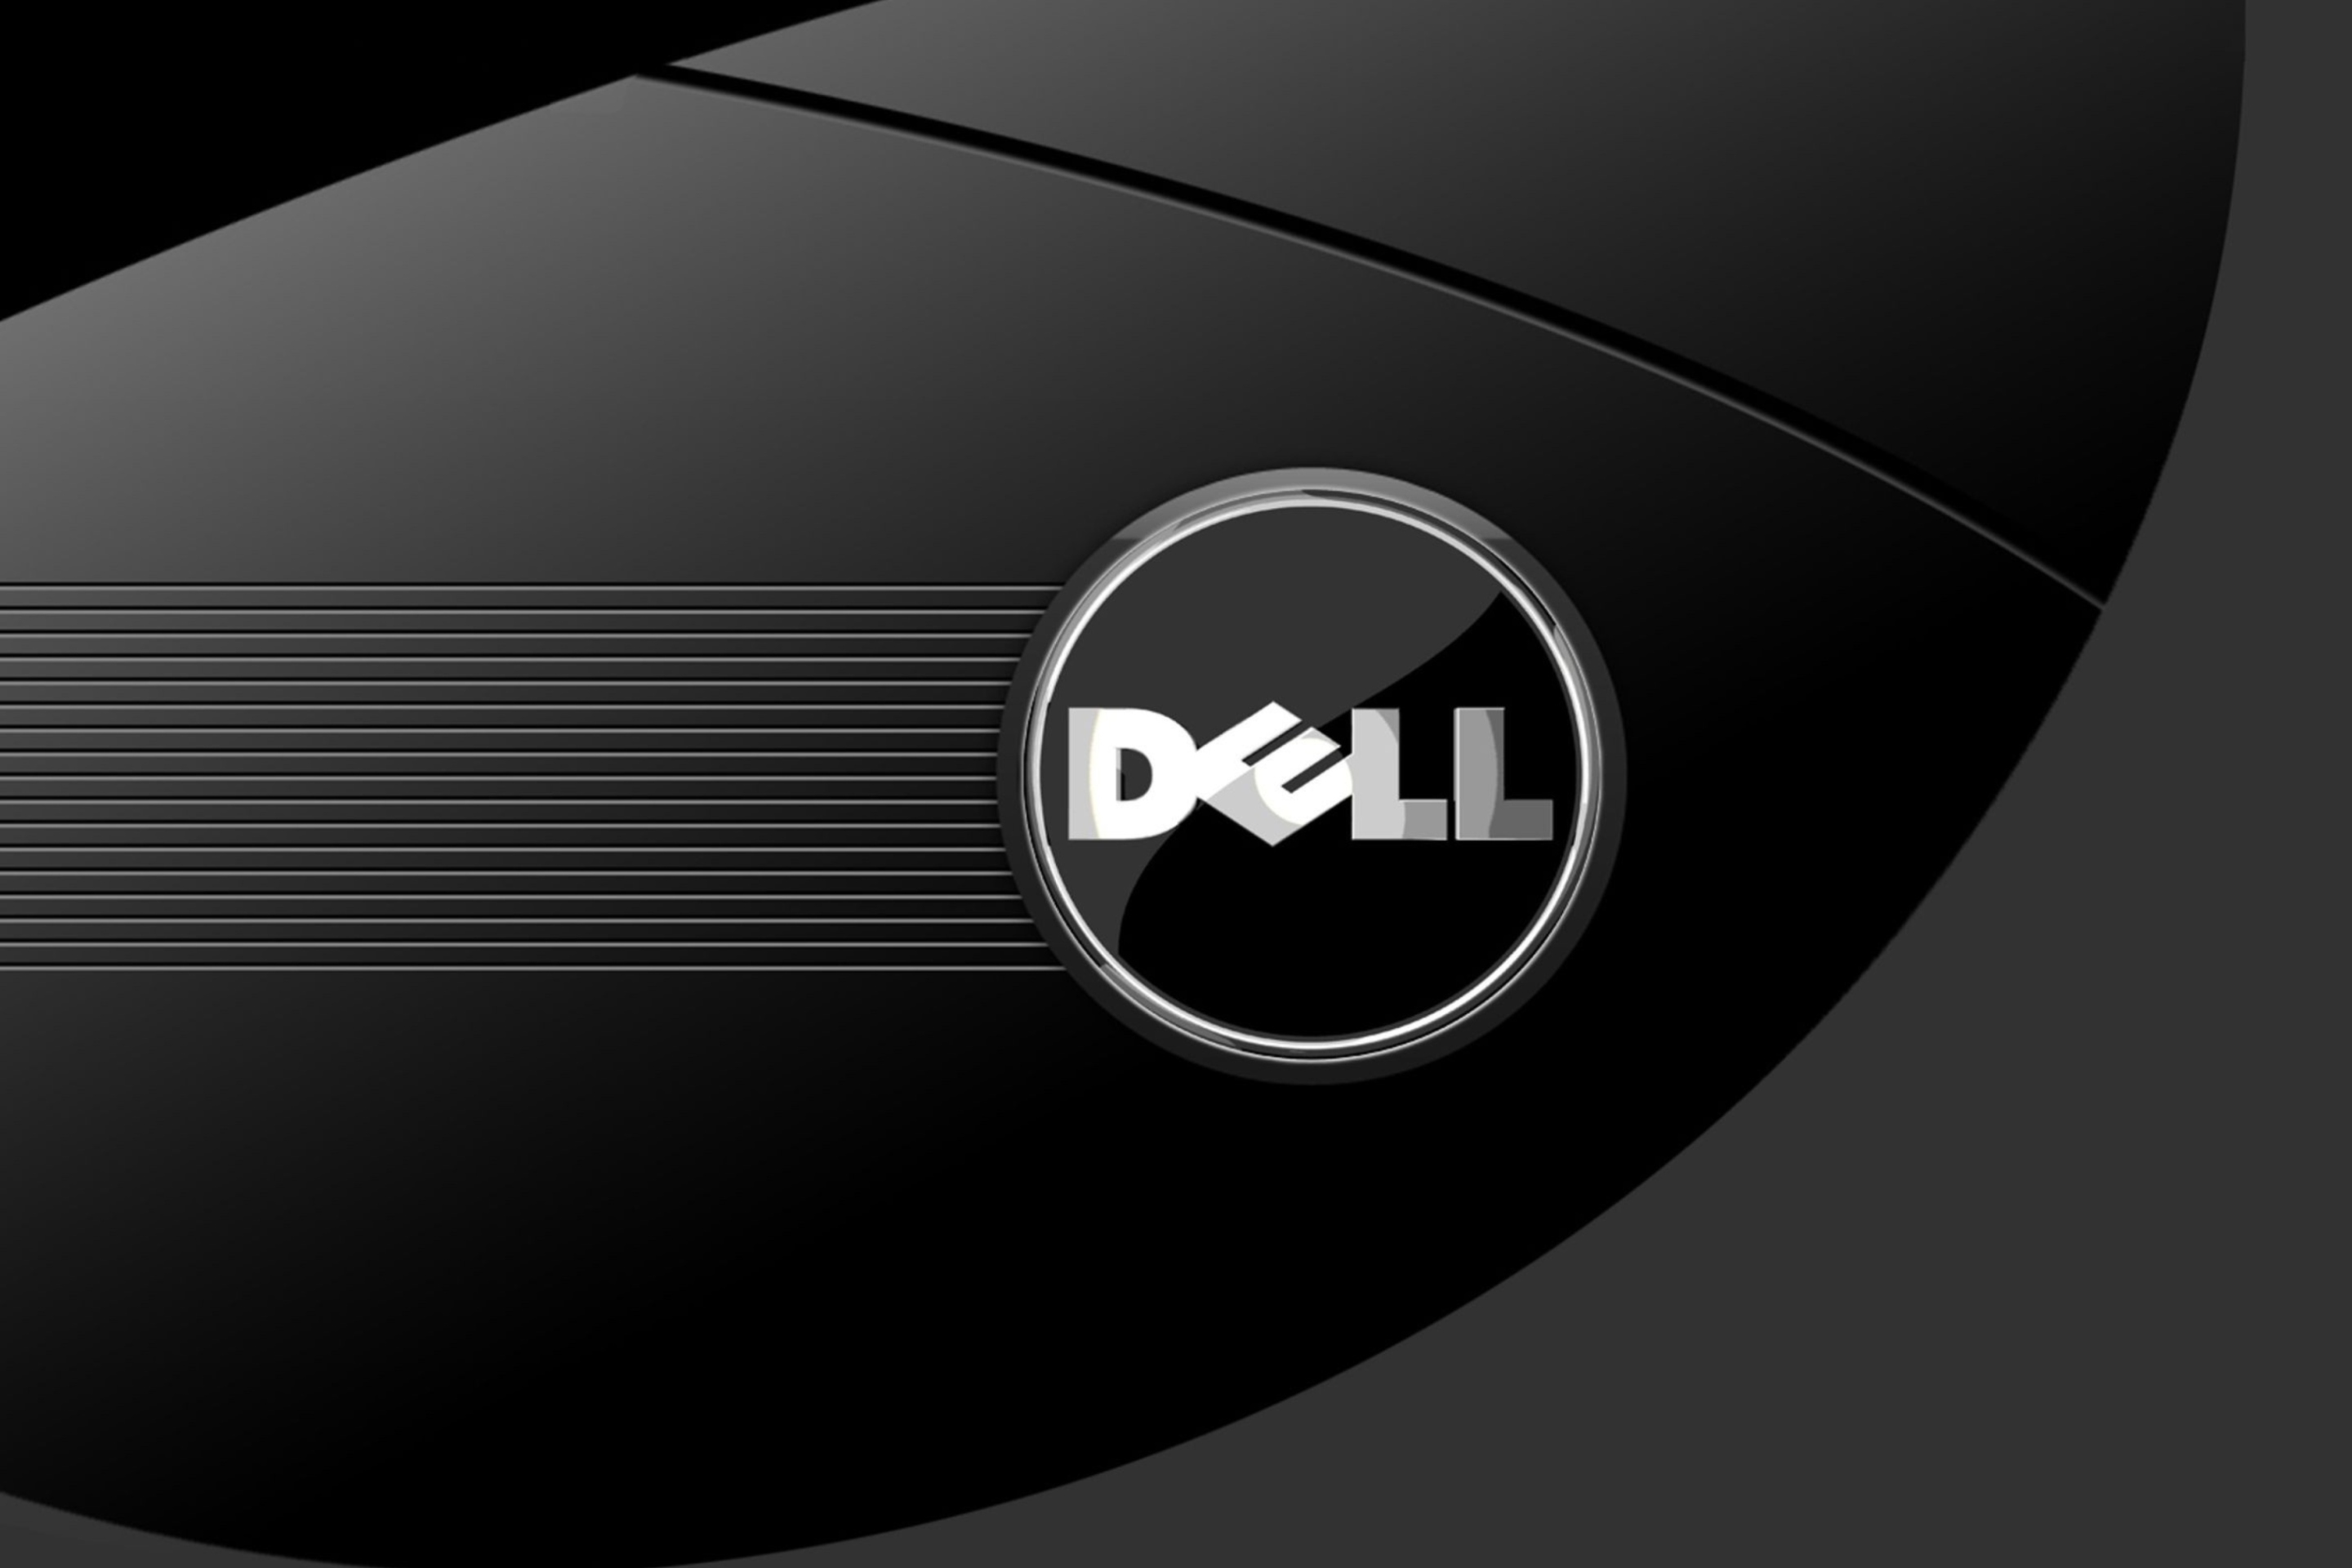 Dell Black And White Logo wallpaper 2880x1920